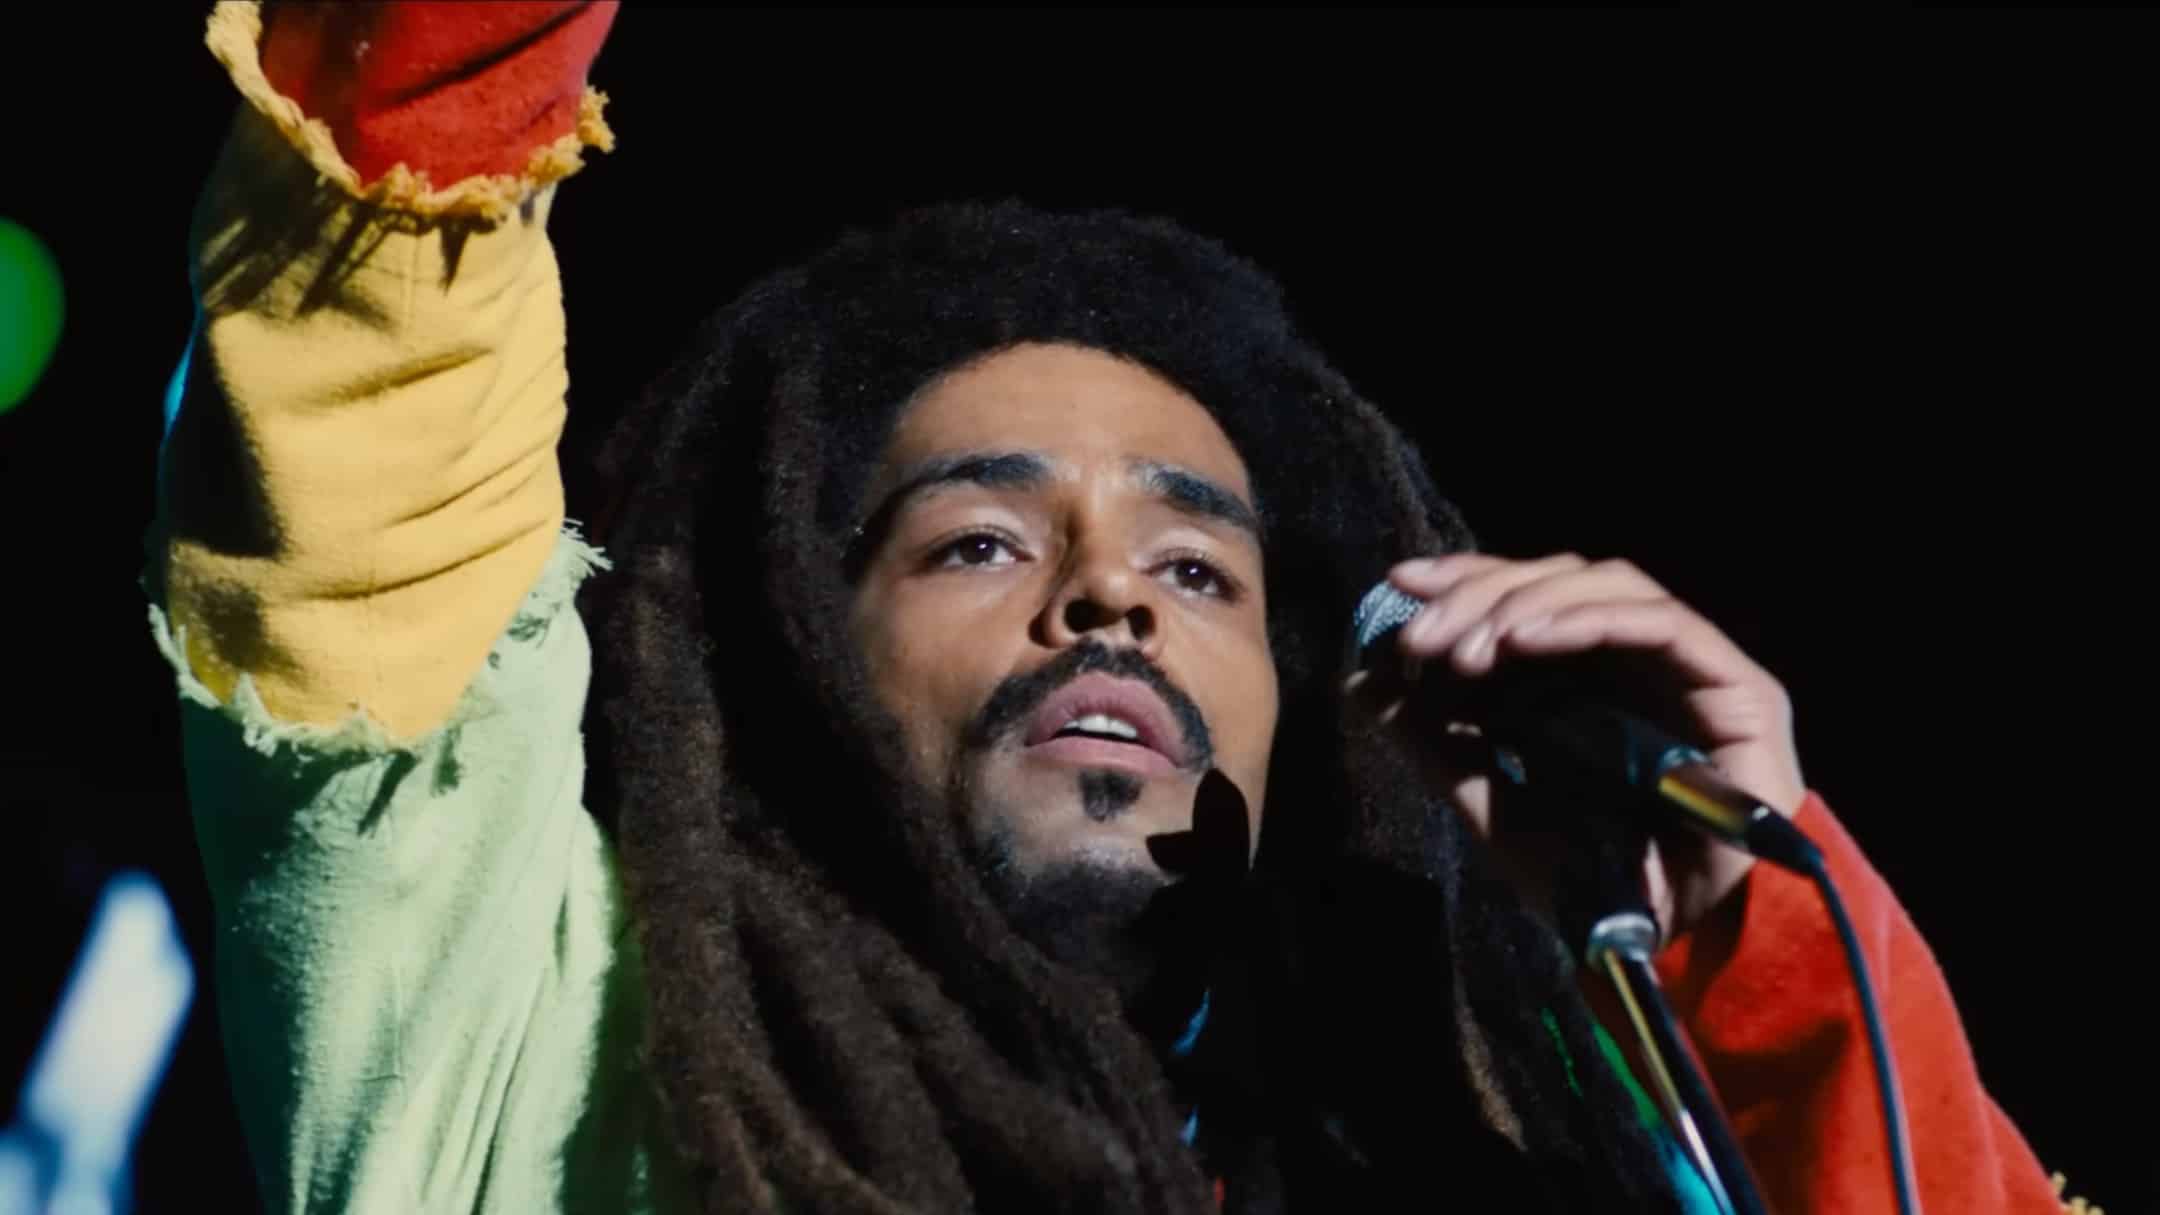 No Woman No Cry Bob Marley Minimalist Song Lyrics Greatest Hits of